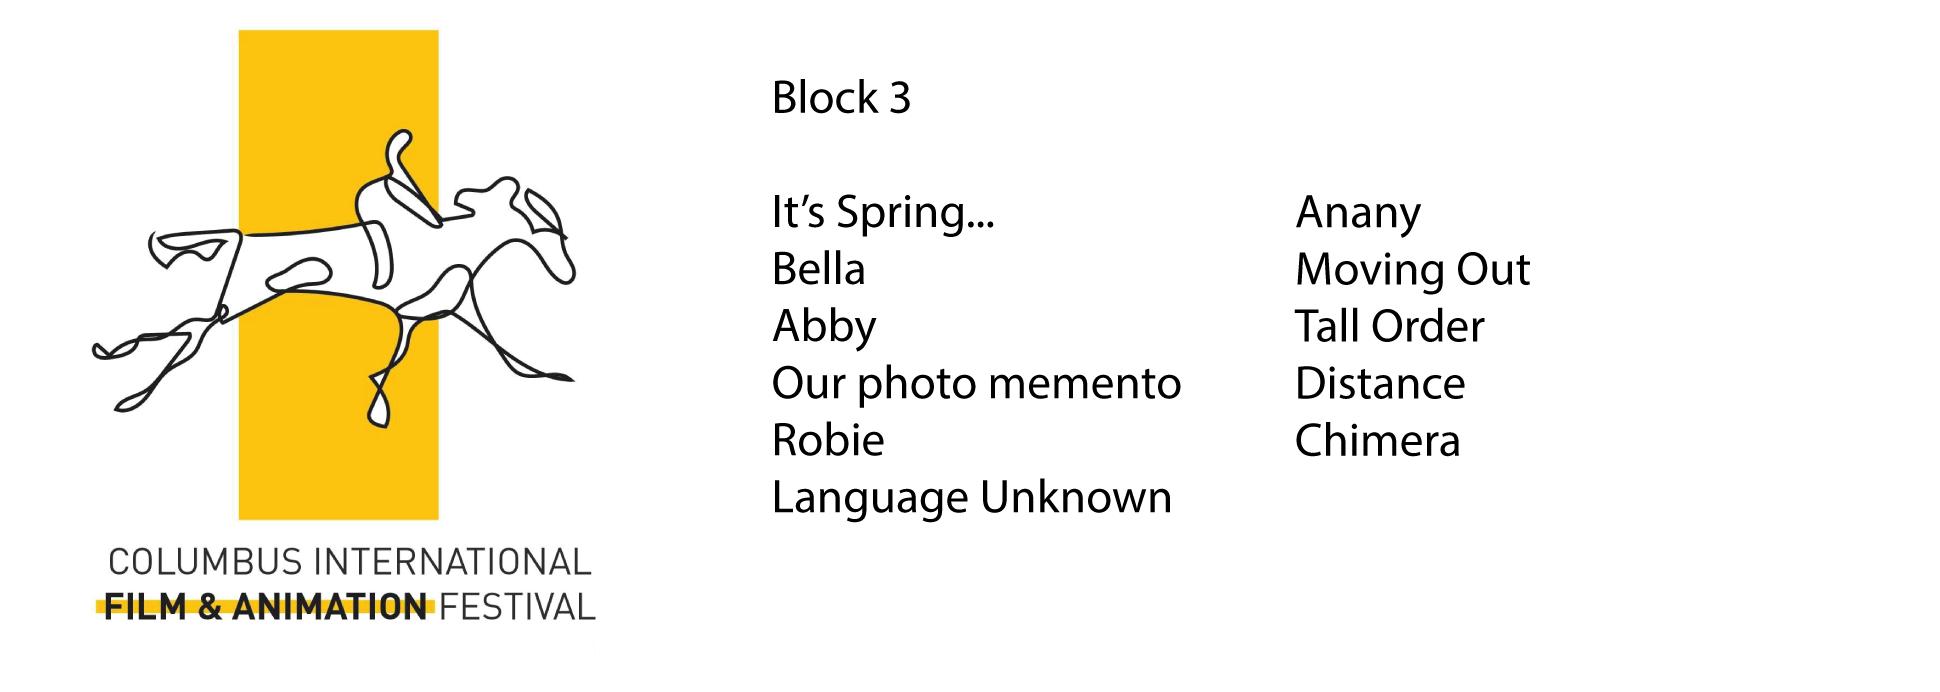 Block 3